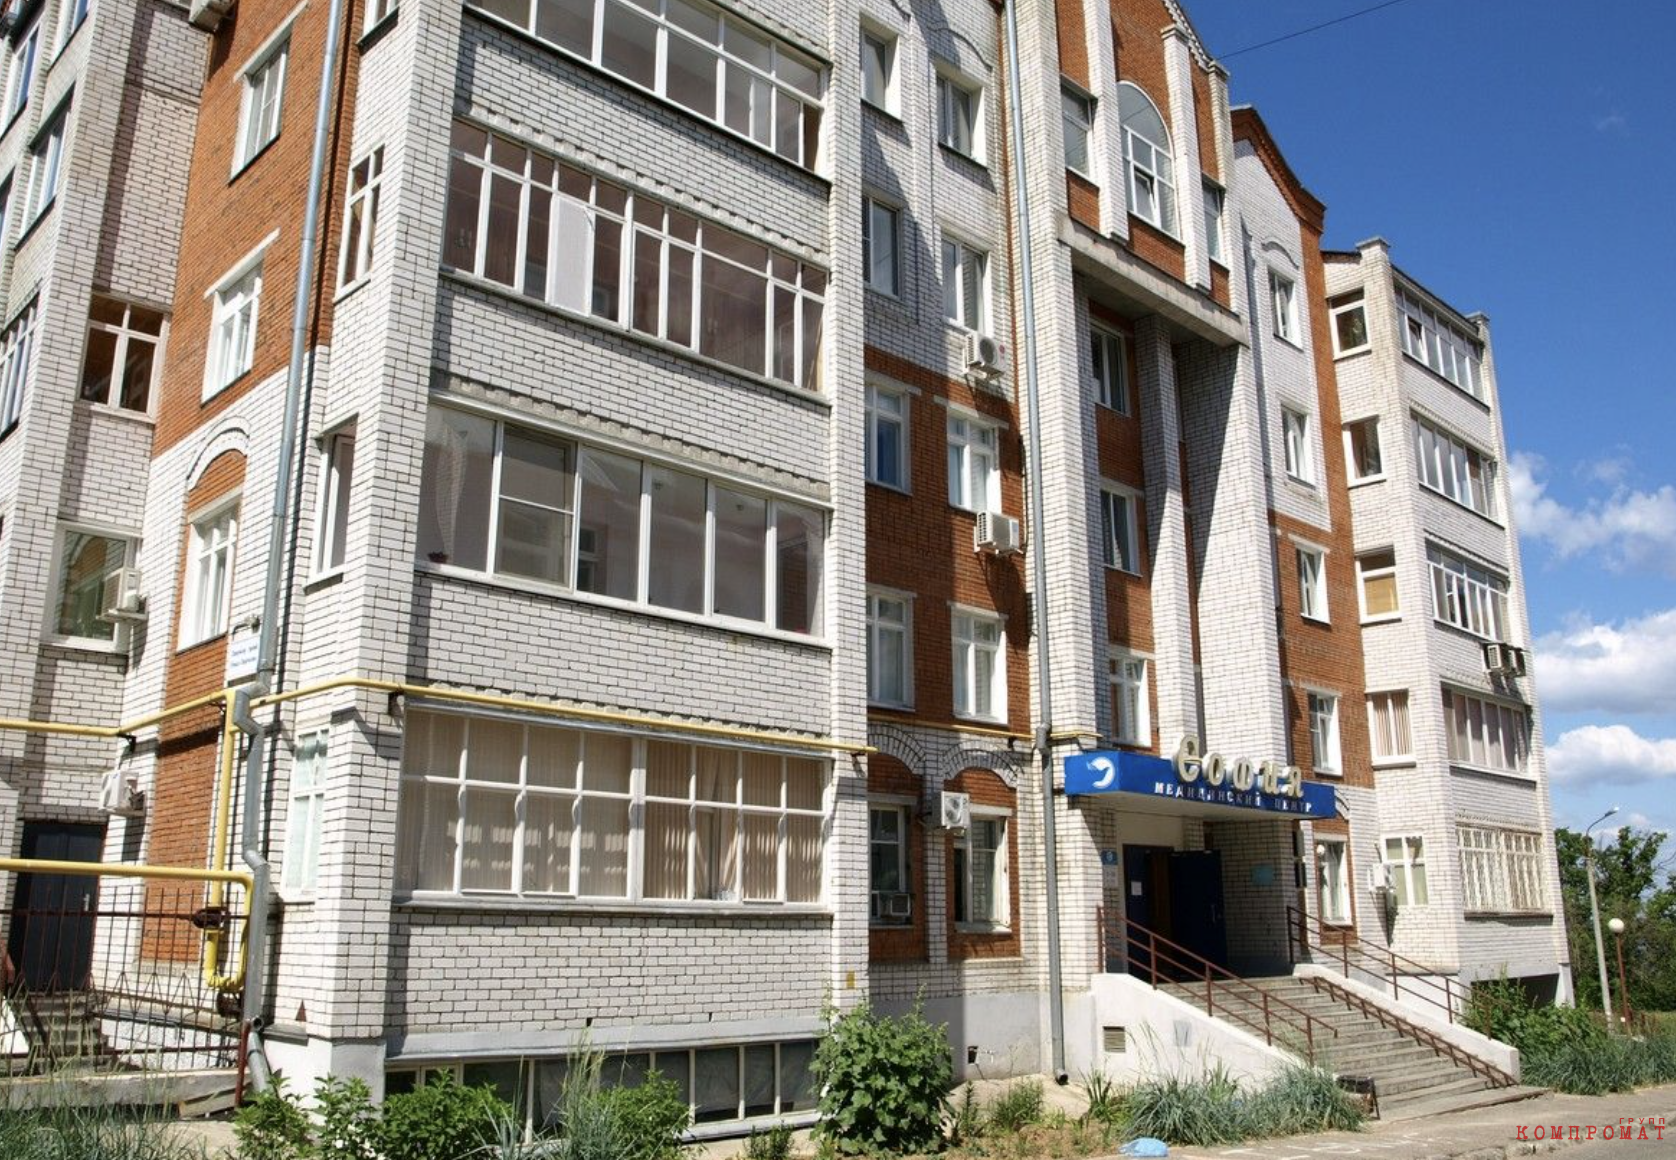 Brick five-story building on Nikita Sverchkov Street in Cheboksary.